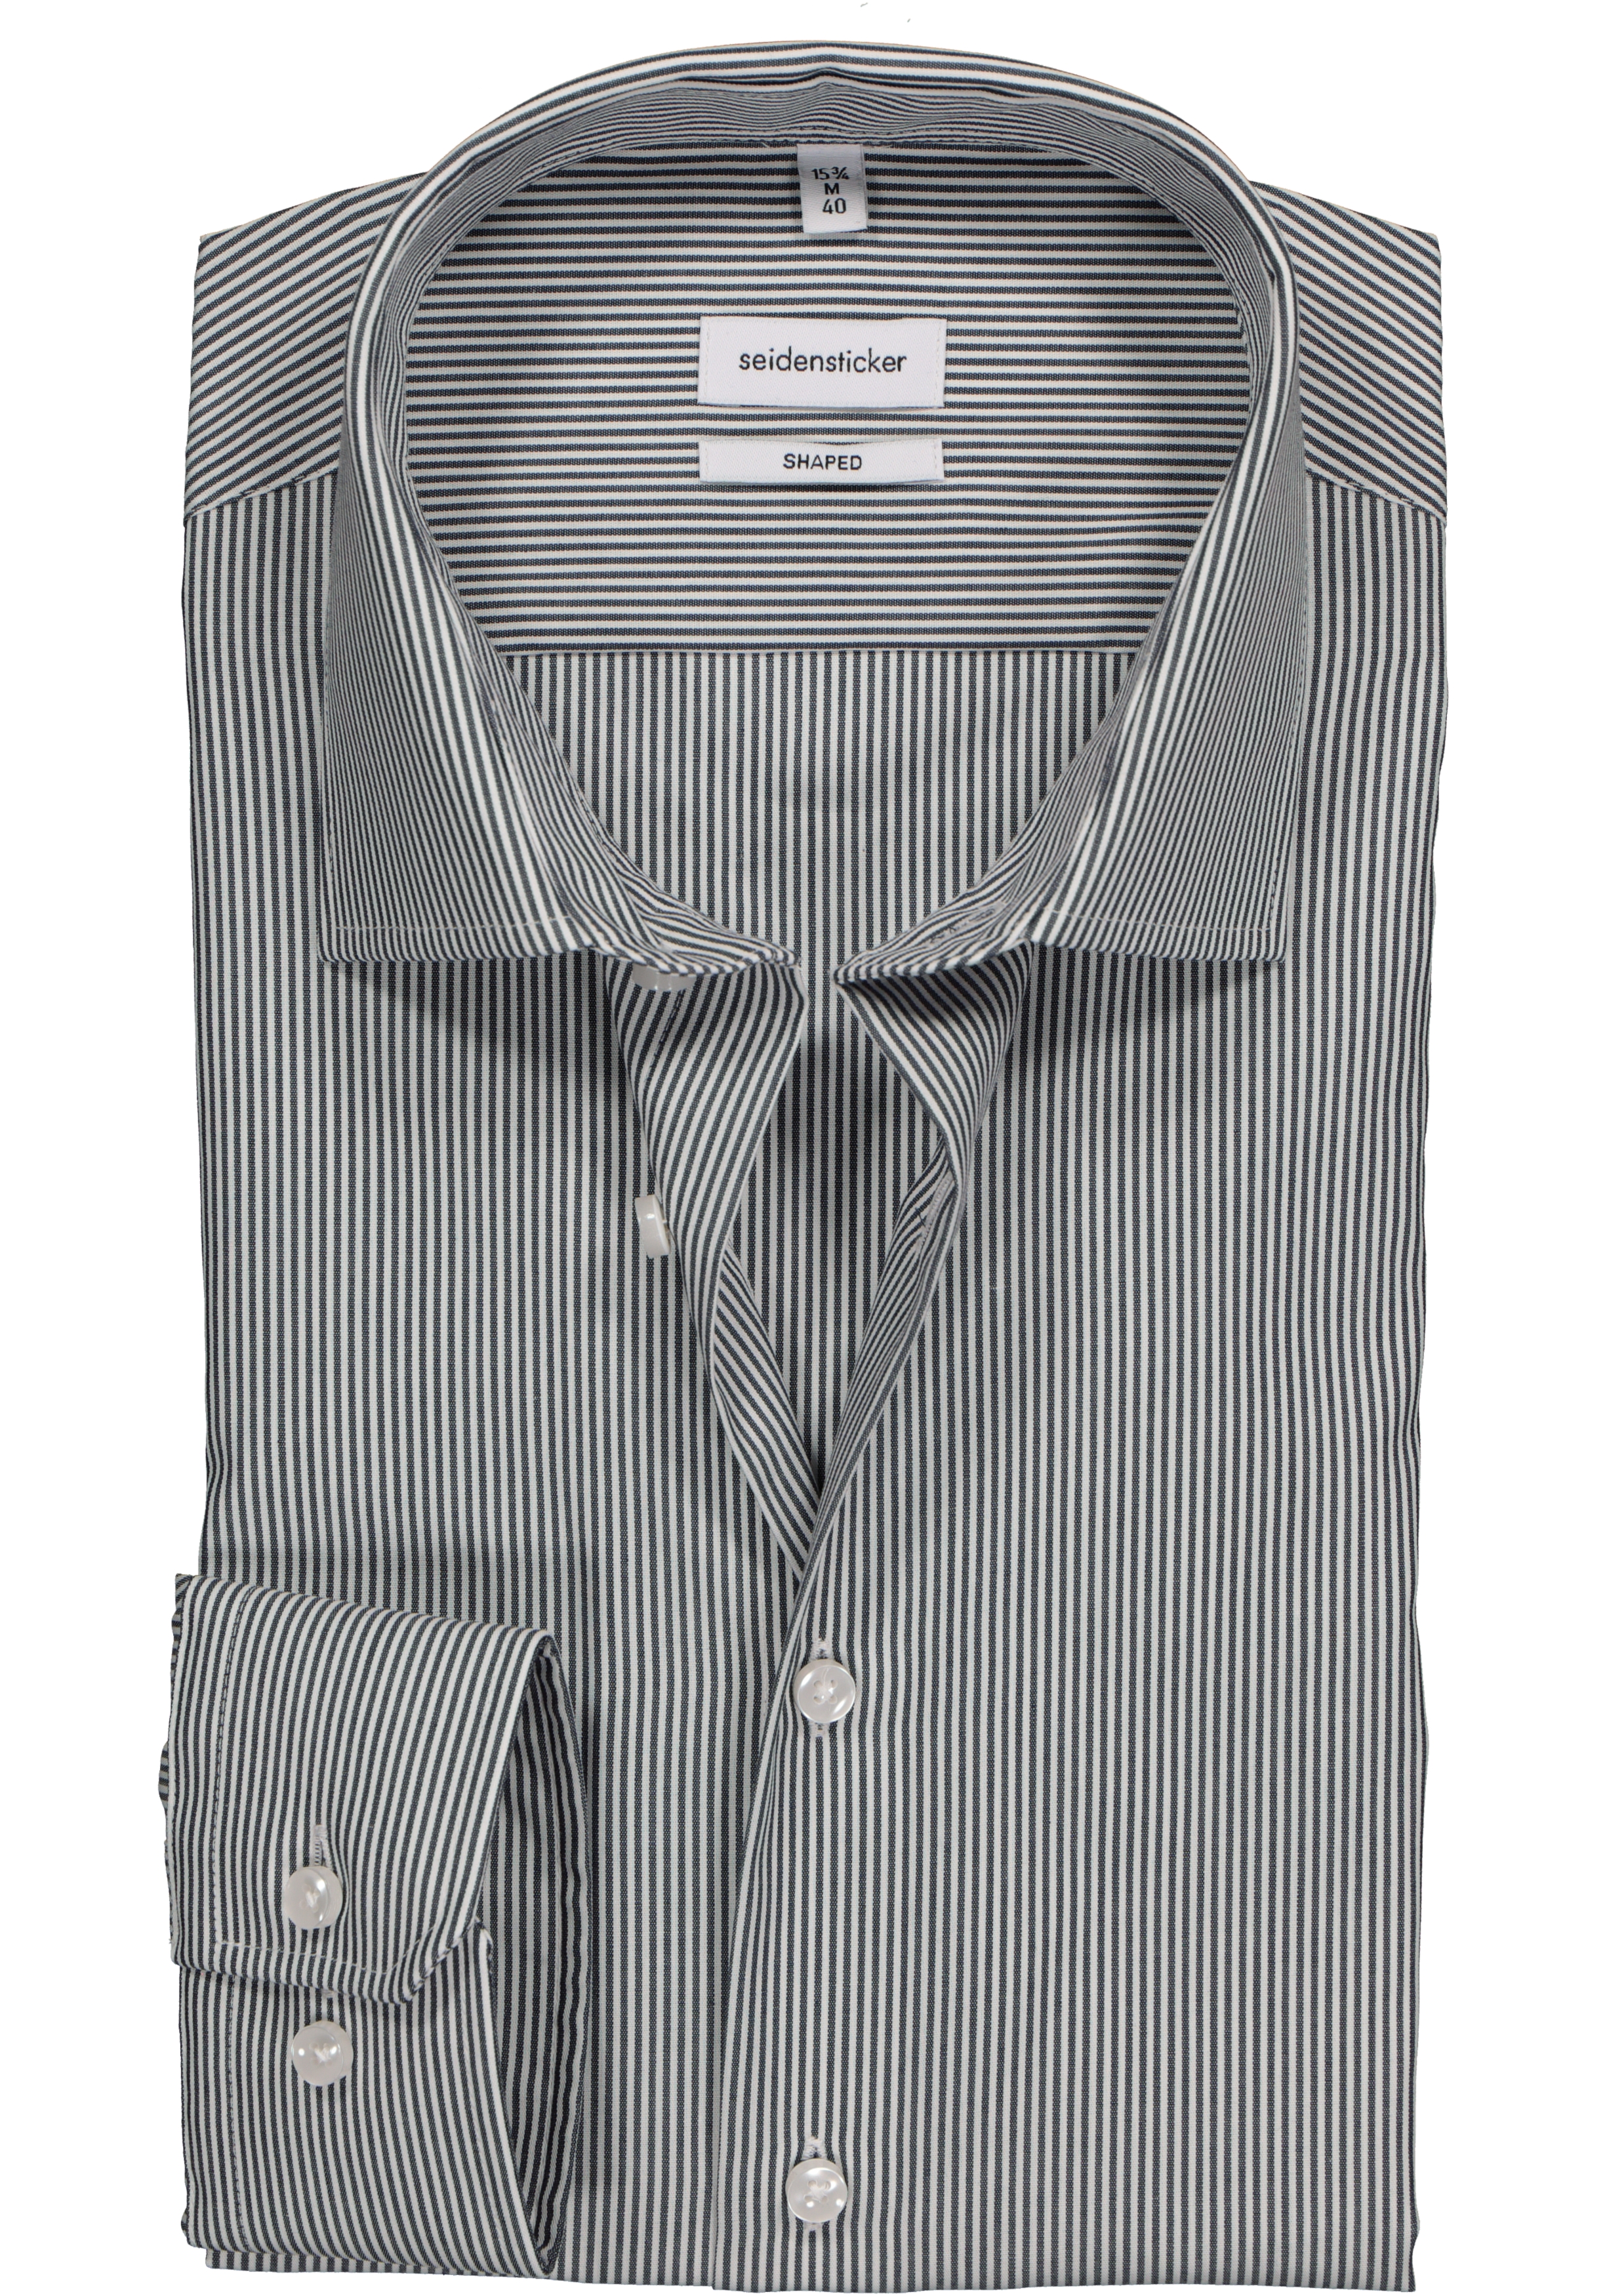 Seidensticker shaped fit overhemd, donkerblauw met wit gestreept 